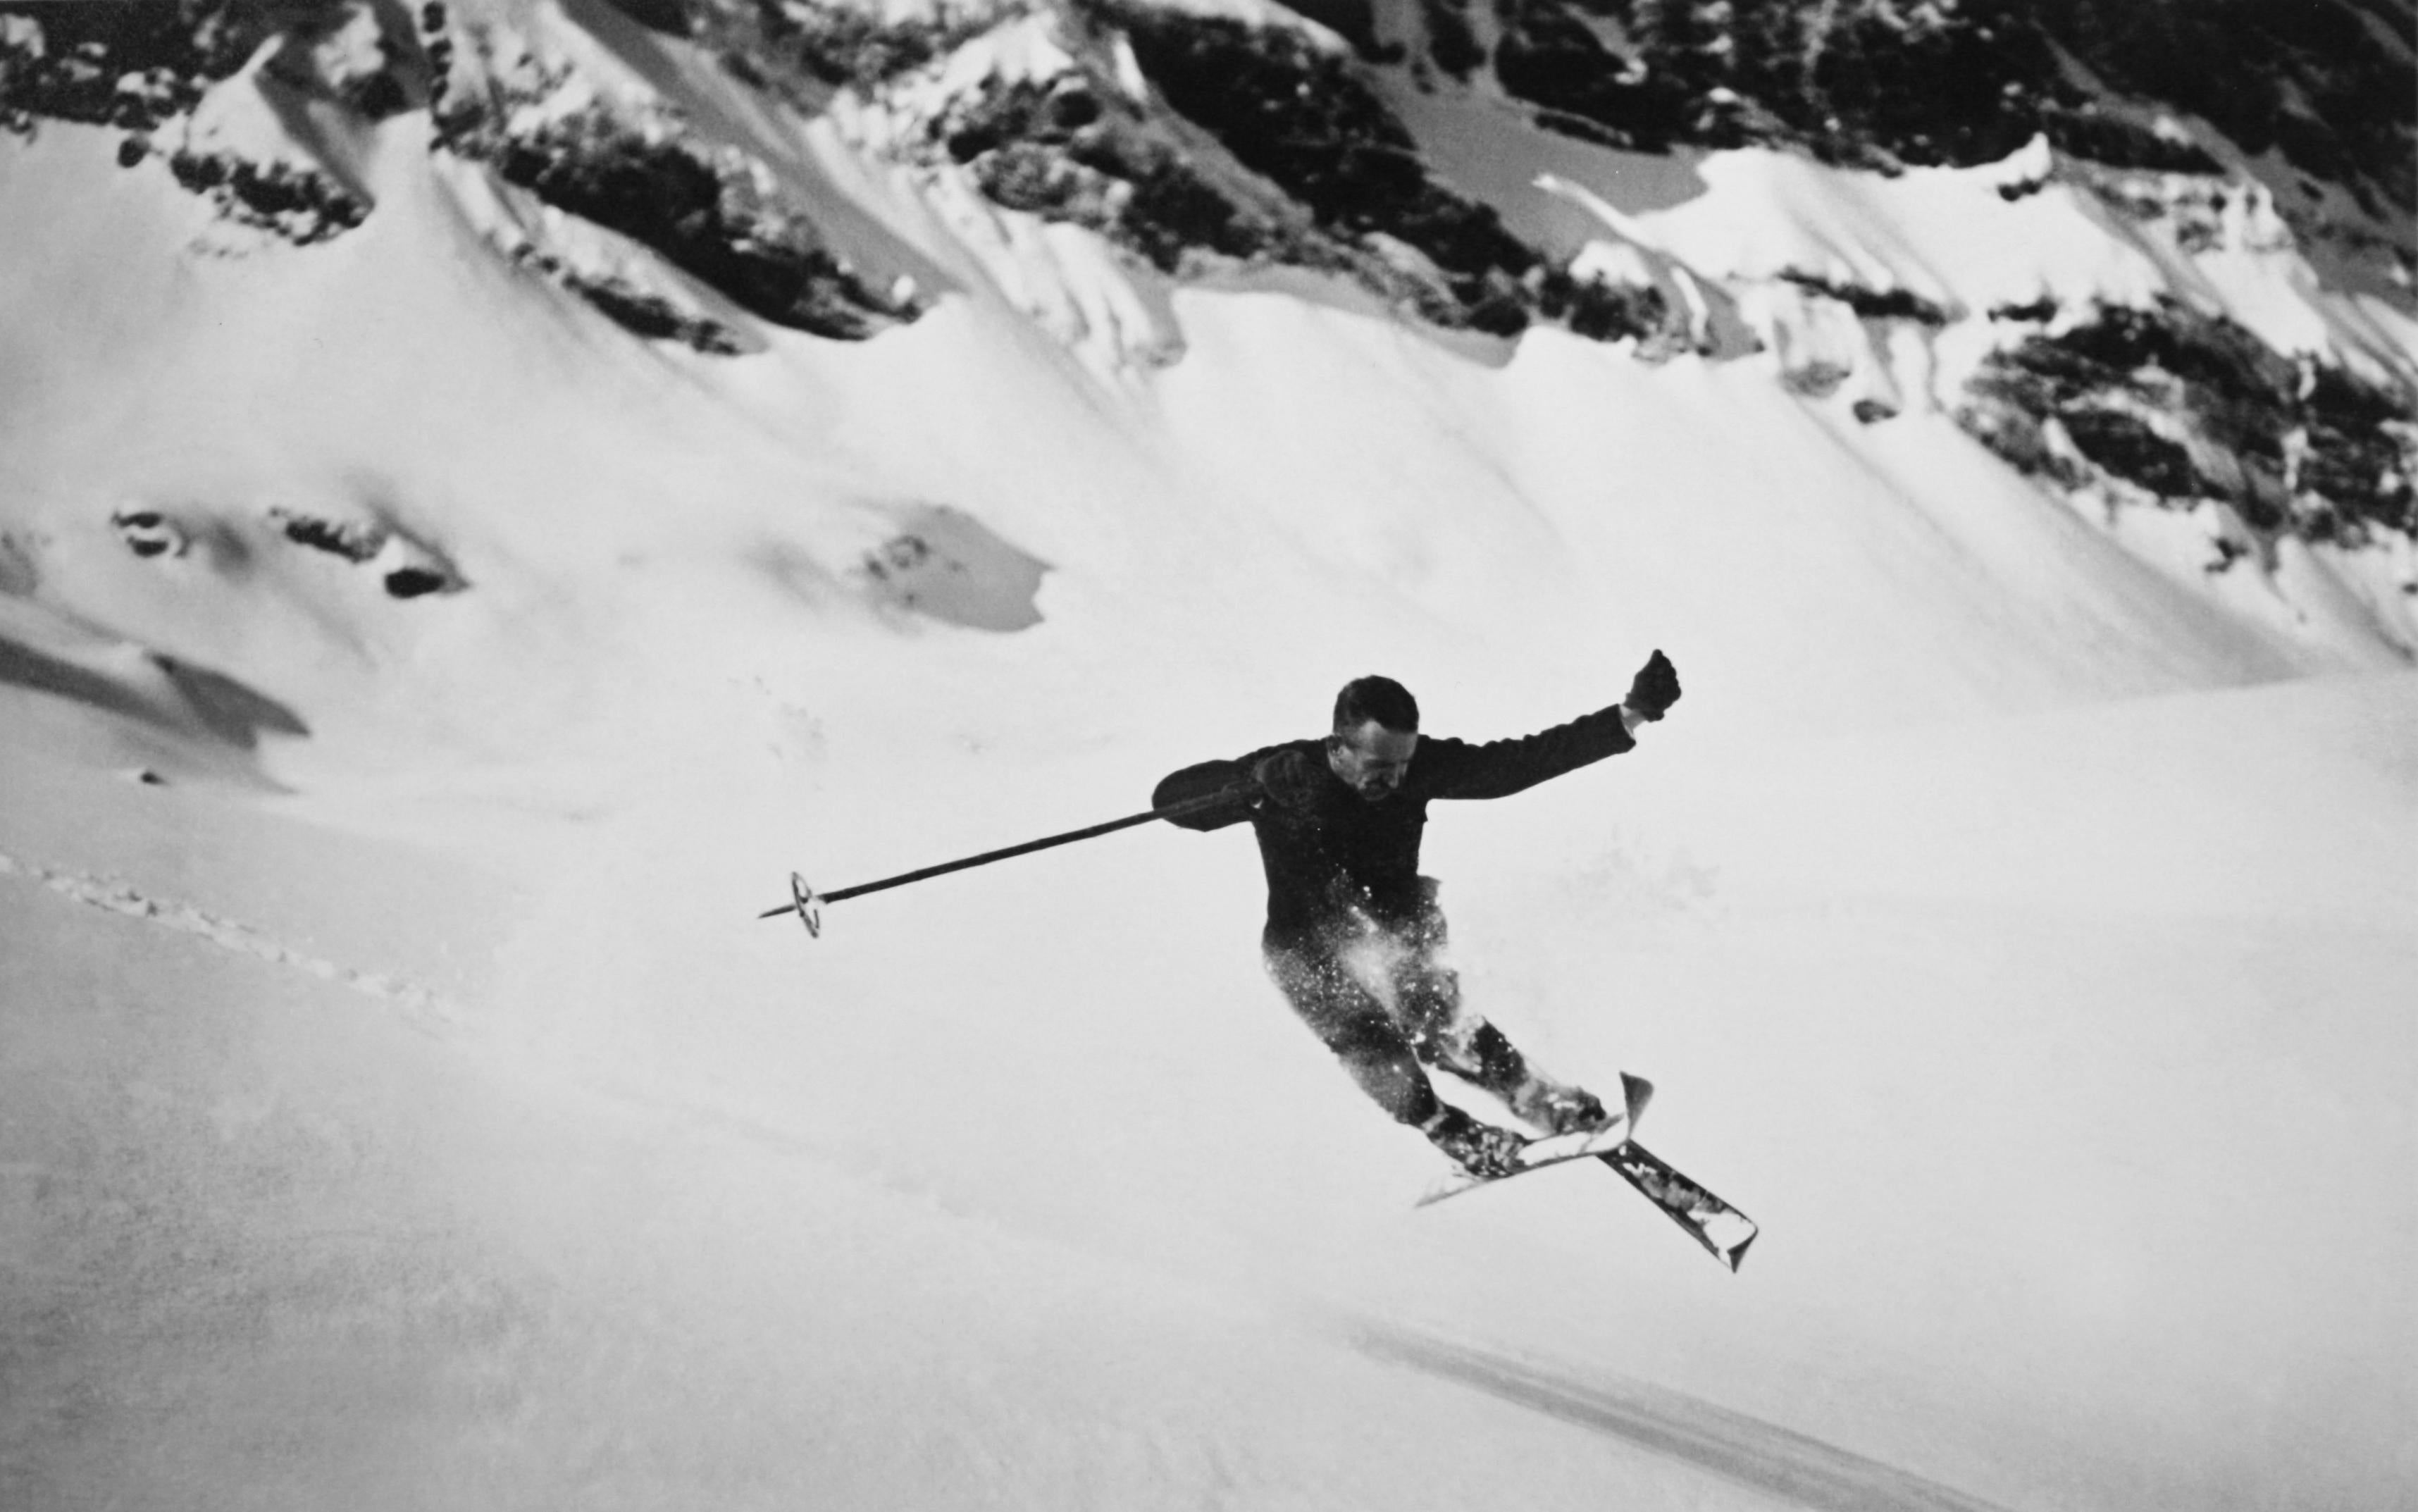 Photographie de ski alpin.
qUERSPRUNG